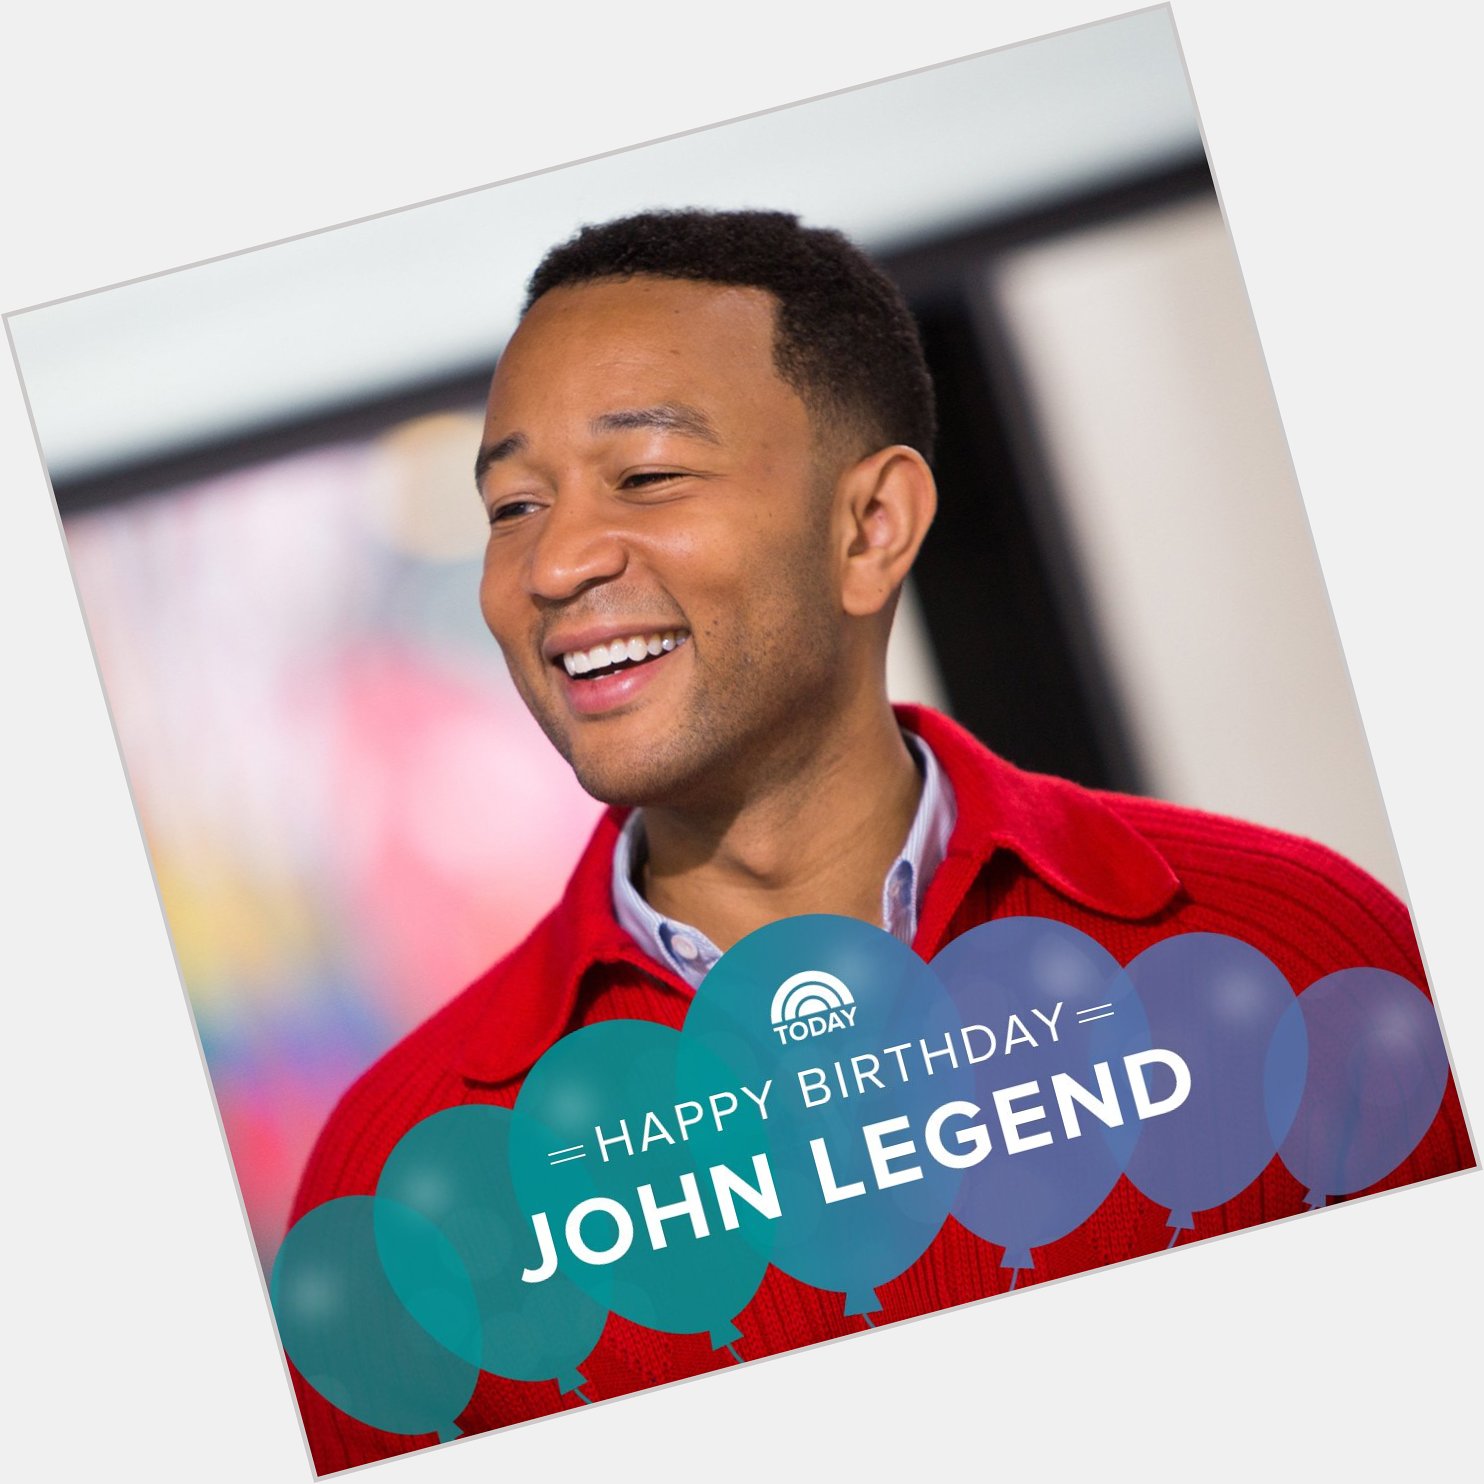 Happy birthday, John Legend!  